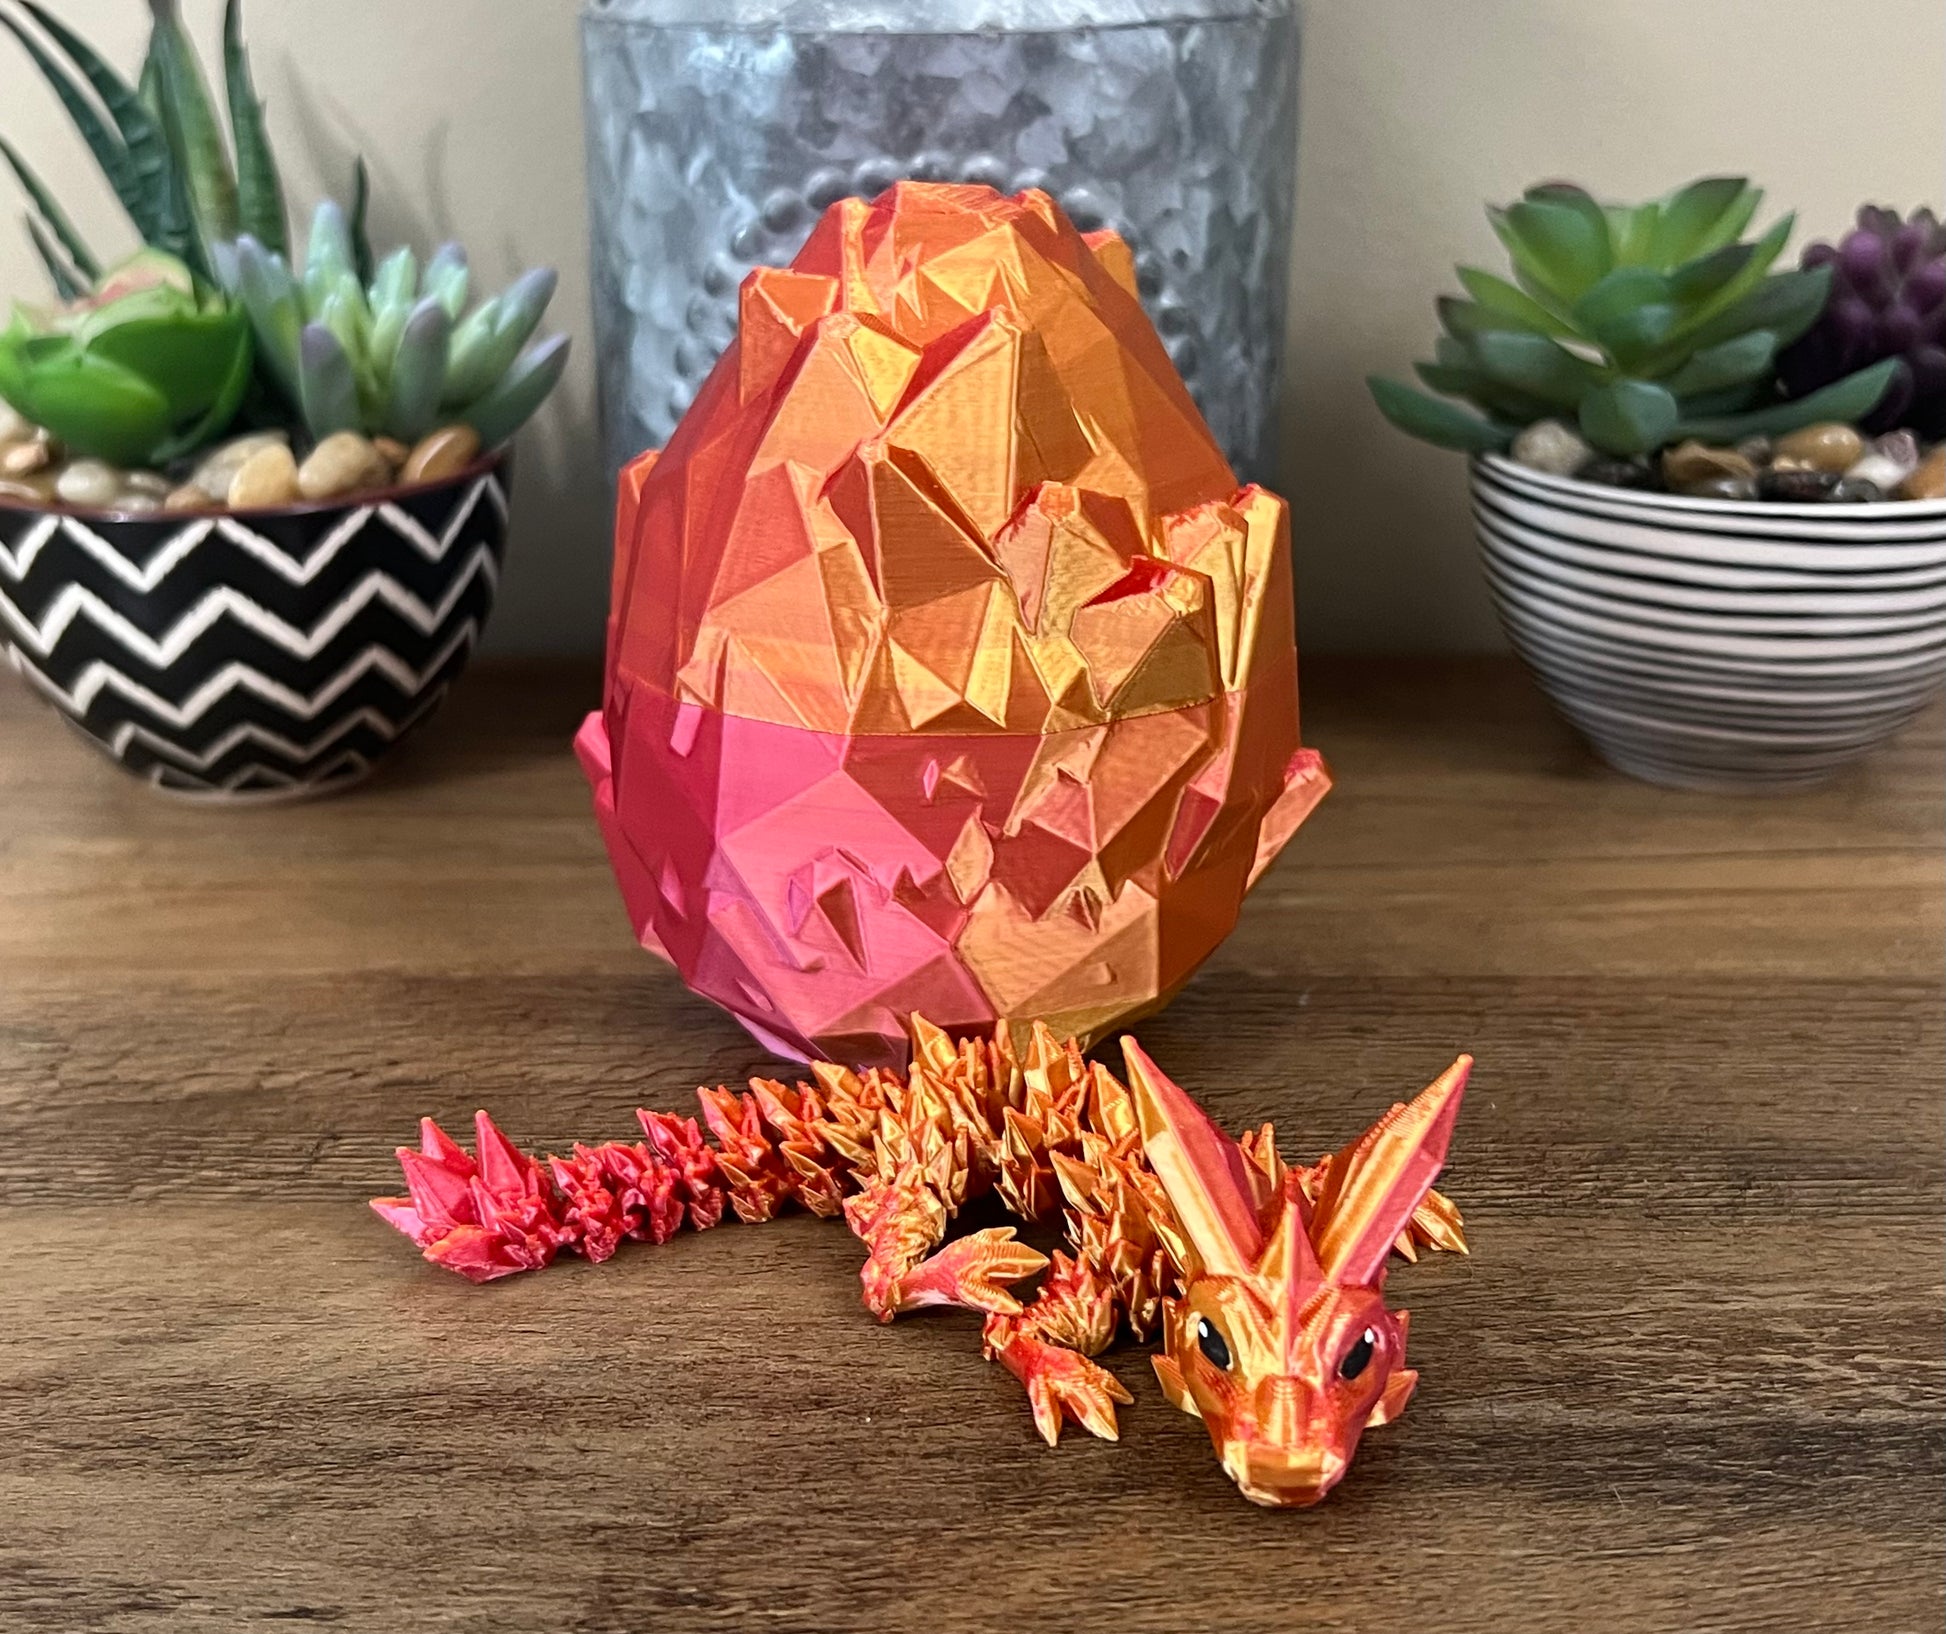 Baby Dragon with Crystal Egg. - Slandis Creations LLC